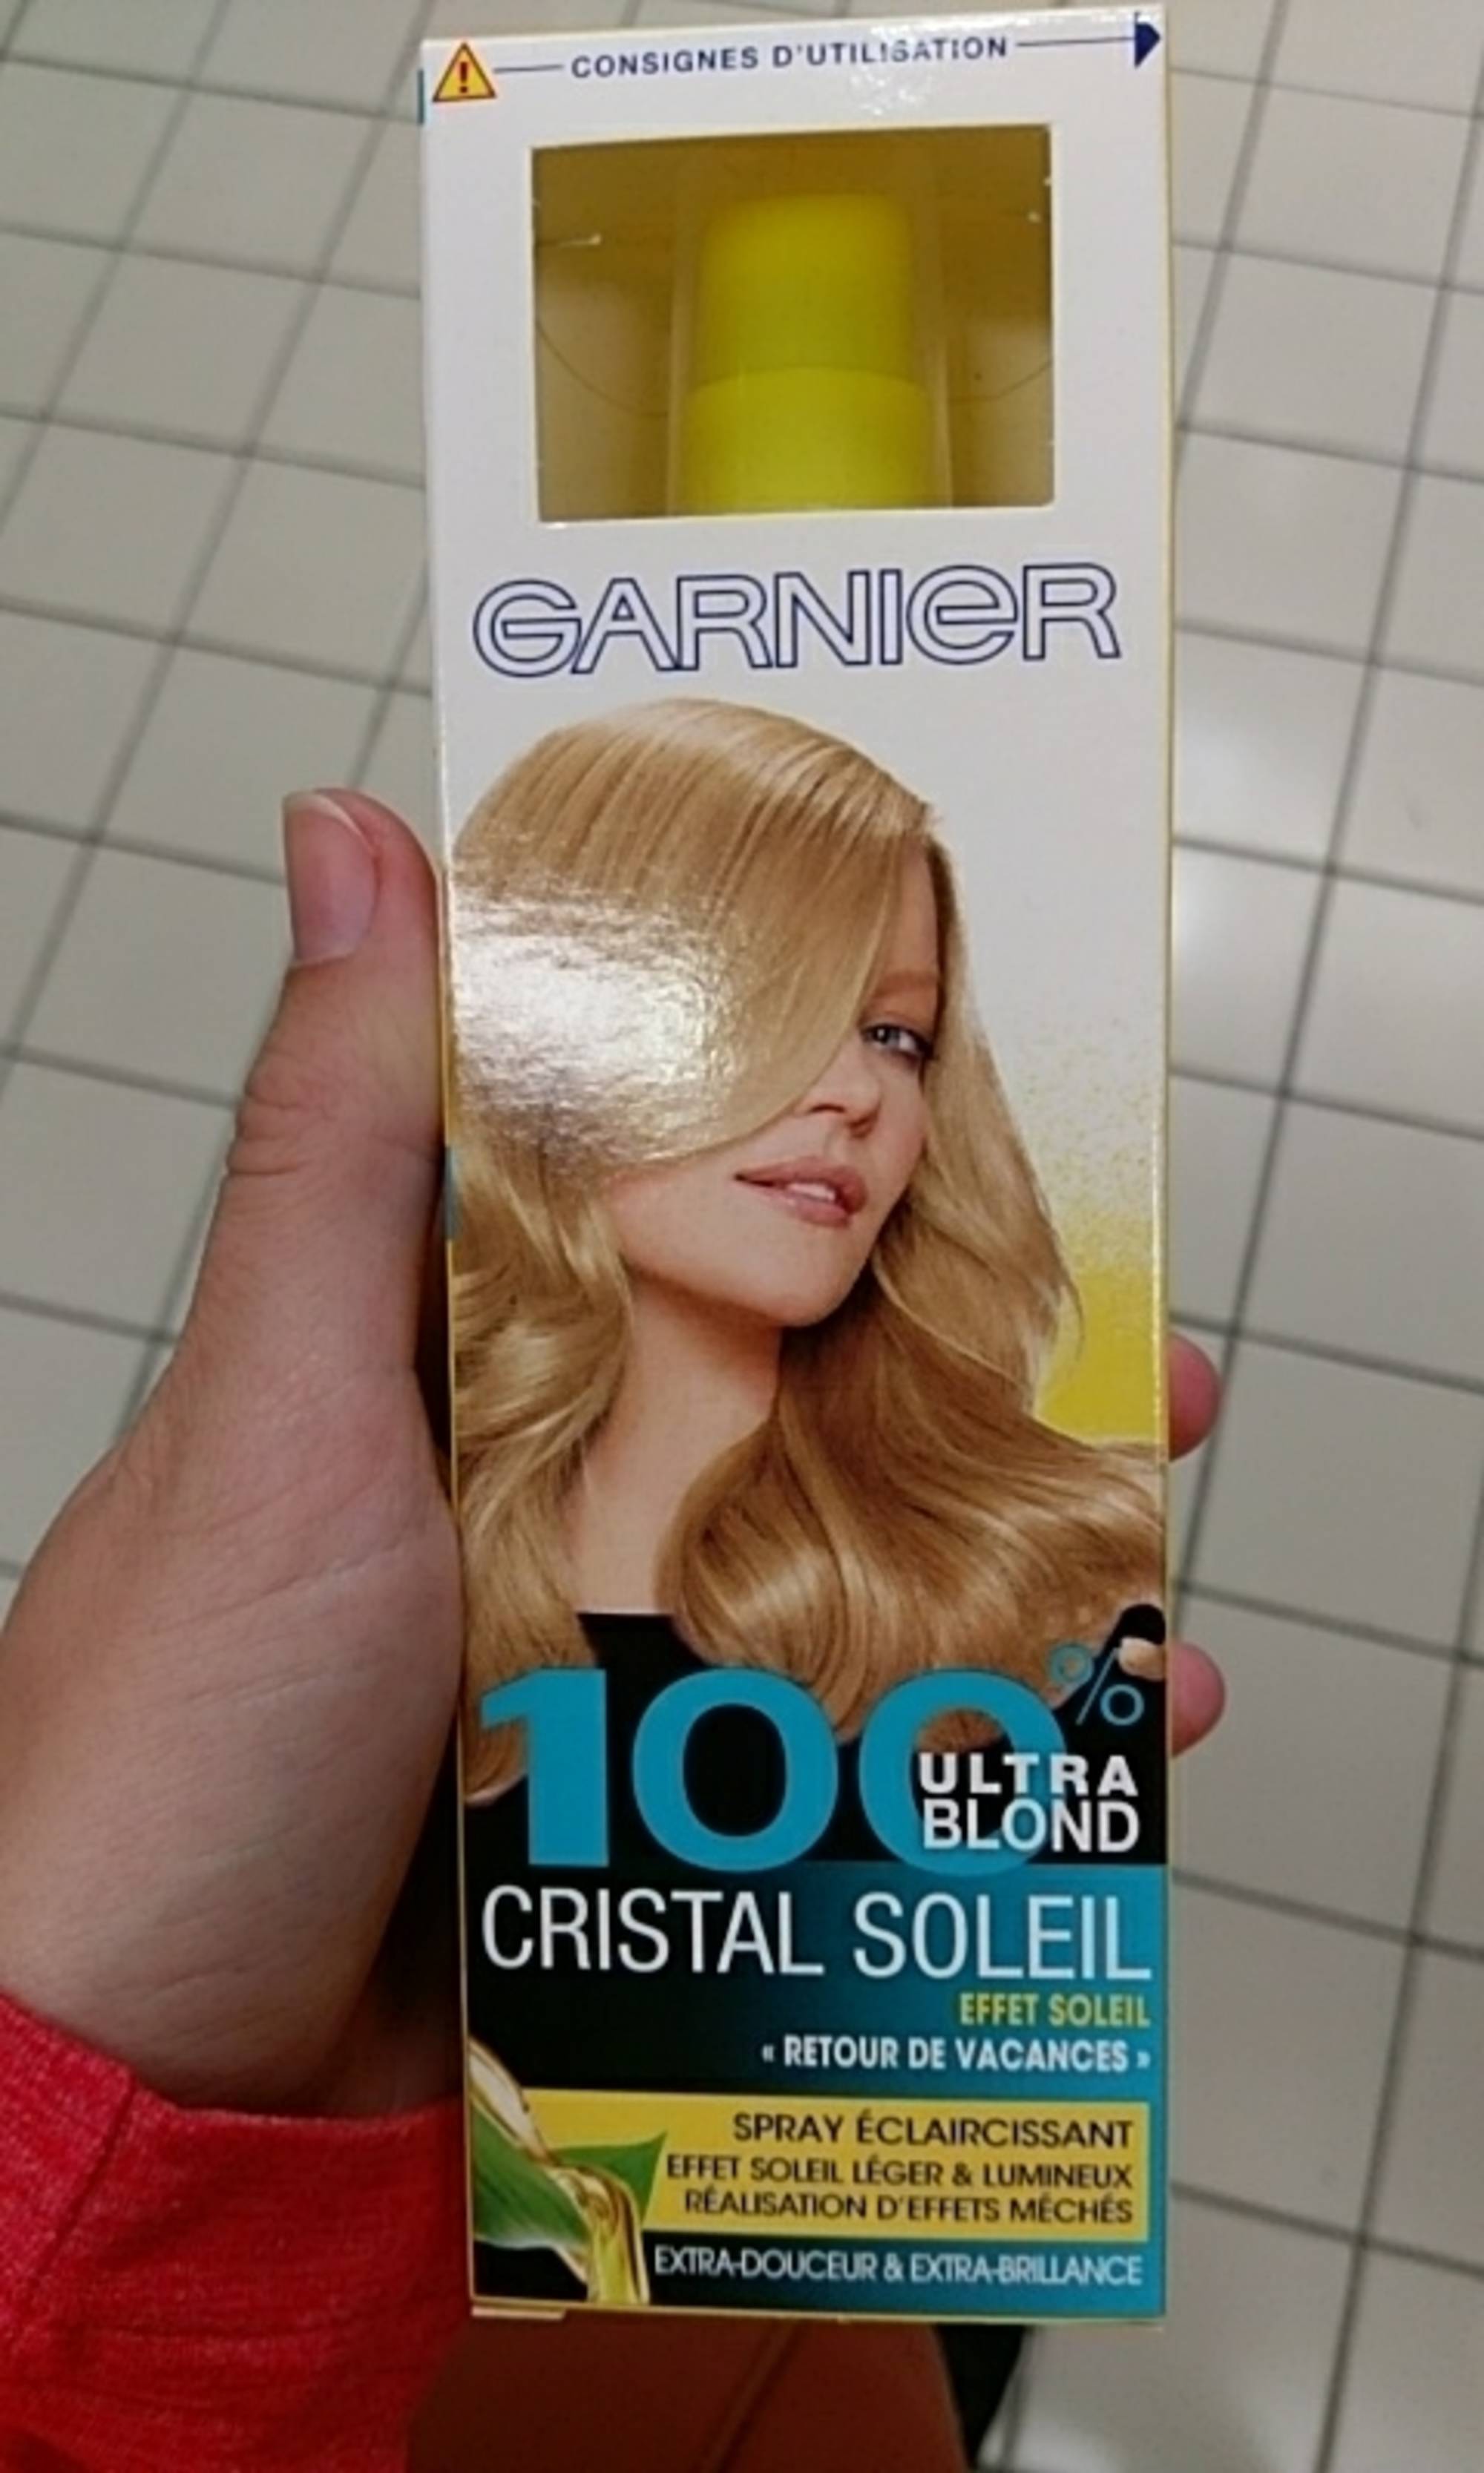 GARNIER - 100% ultra blond - Cristal soleil Spray éclaircissant